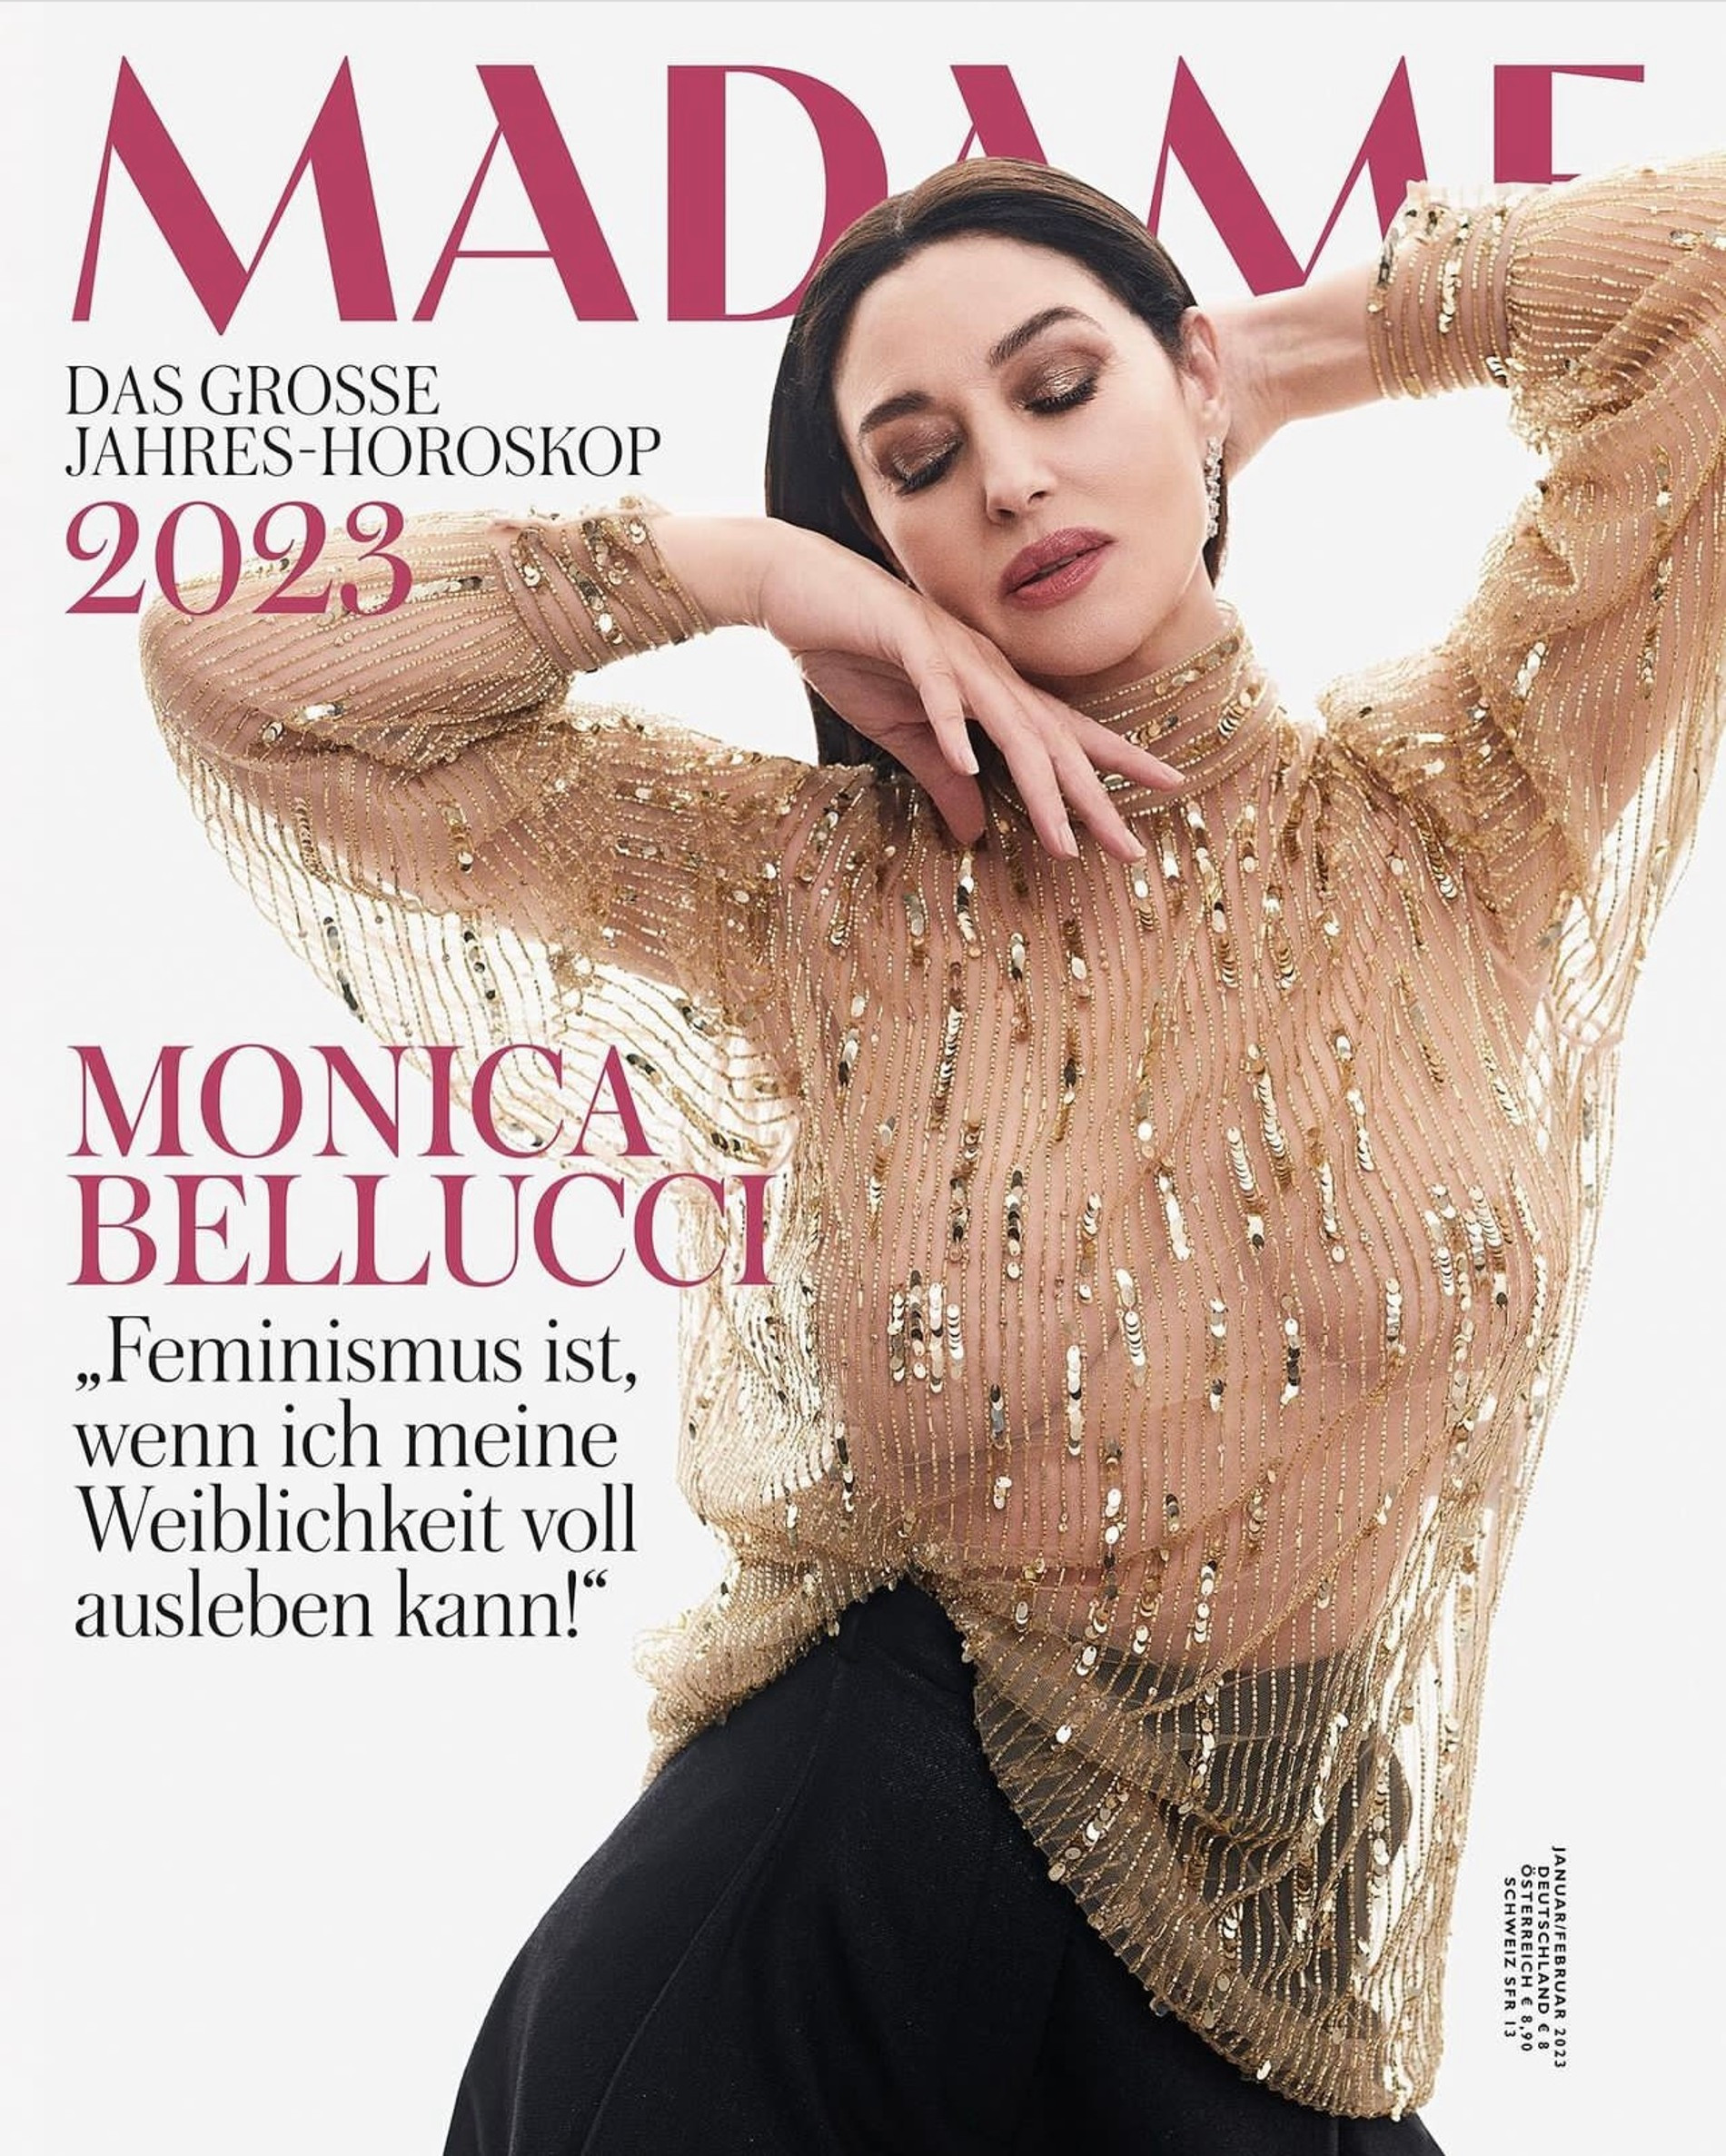 Моника Беллуччи на обложке журнала Madame
Фото: Инстаграм (запрещен в РФ)